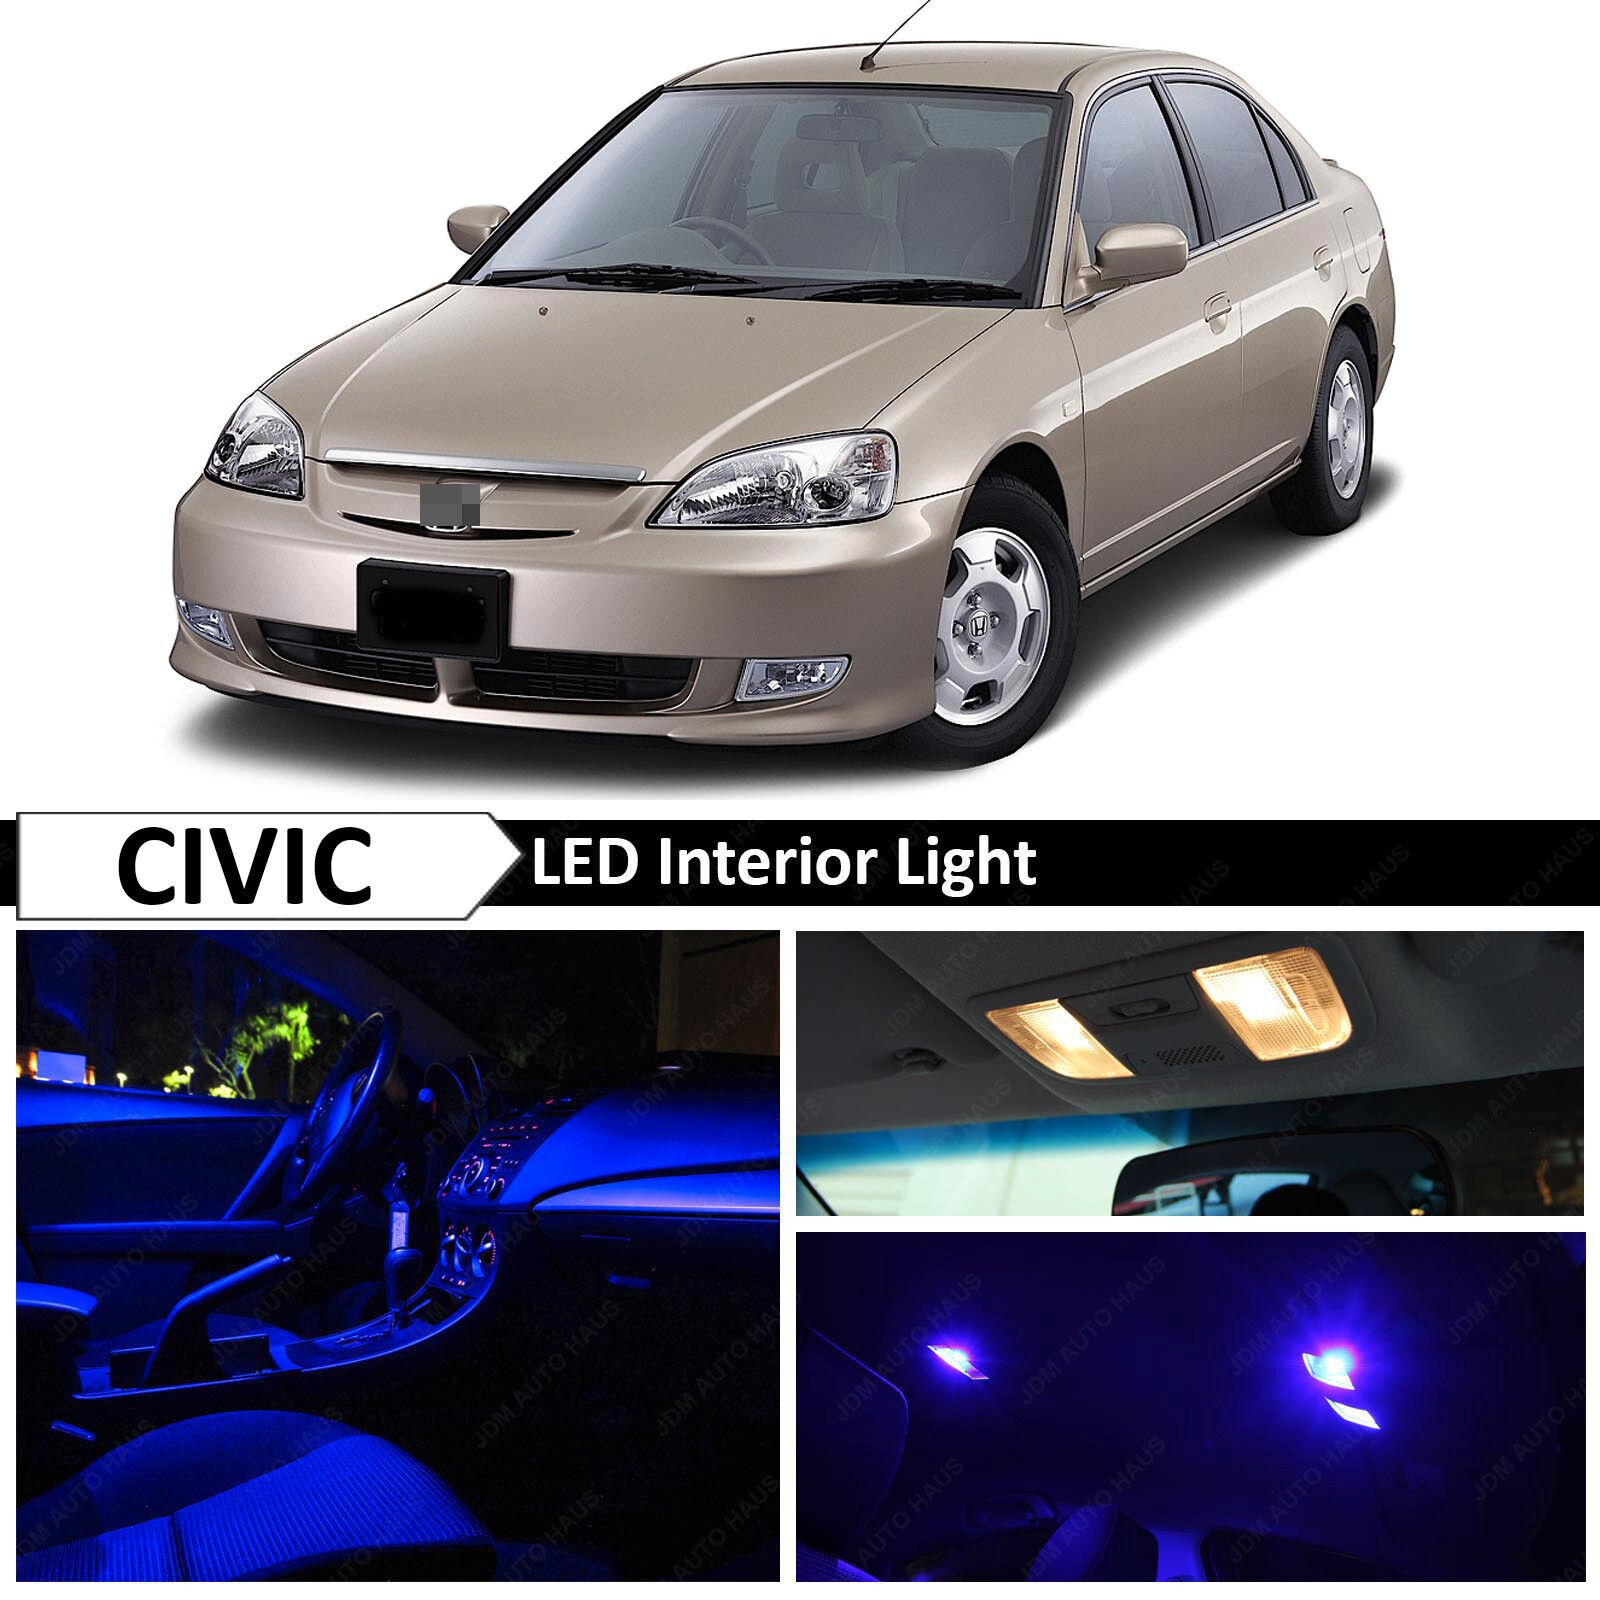 Blue Interior + License LED Light Package Fits 2001-2005 Honda Civic Sedan Coupe